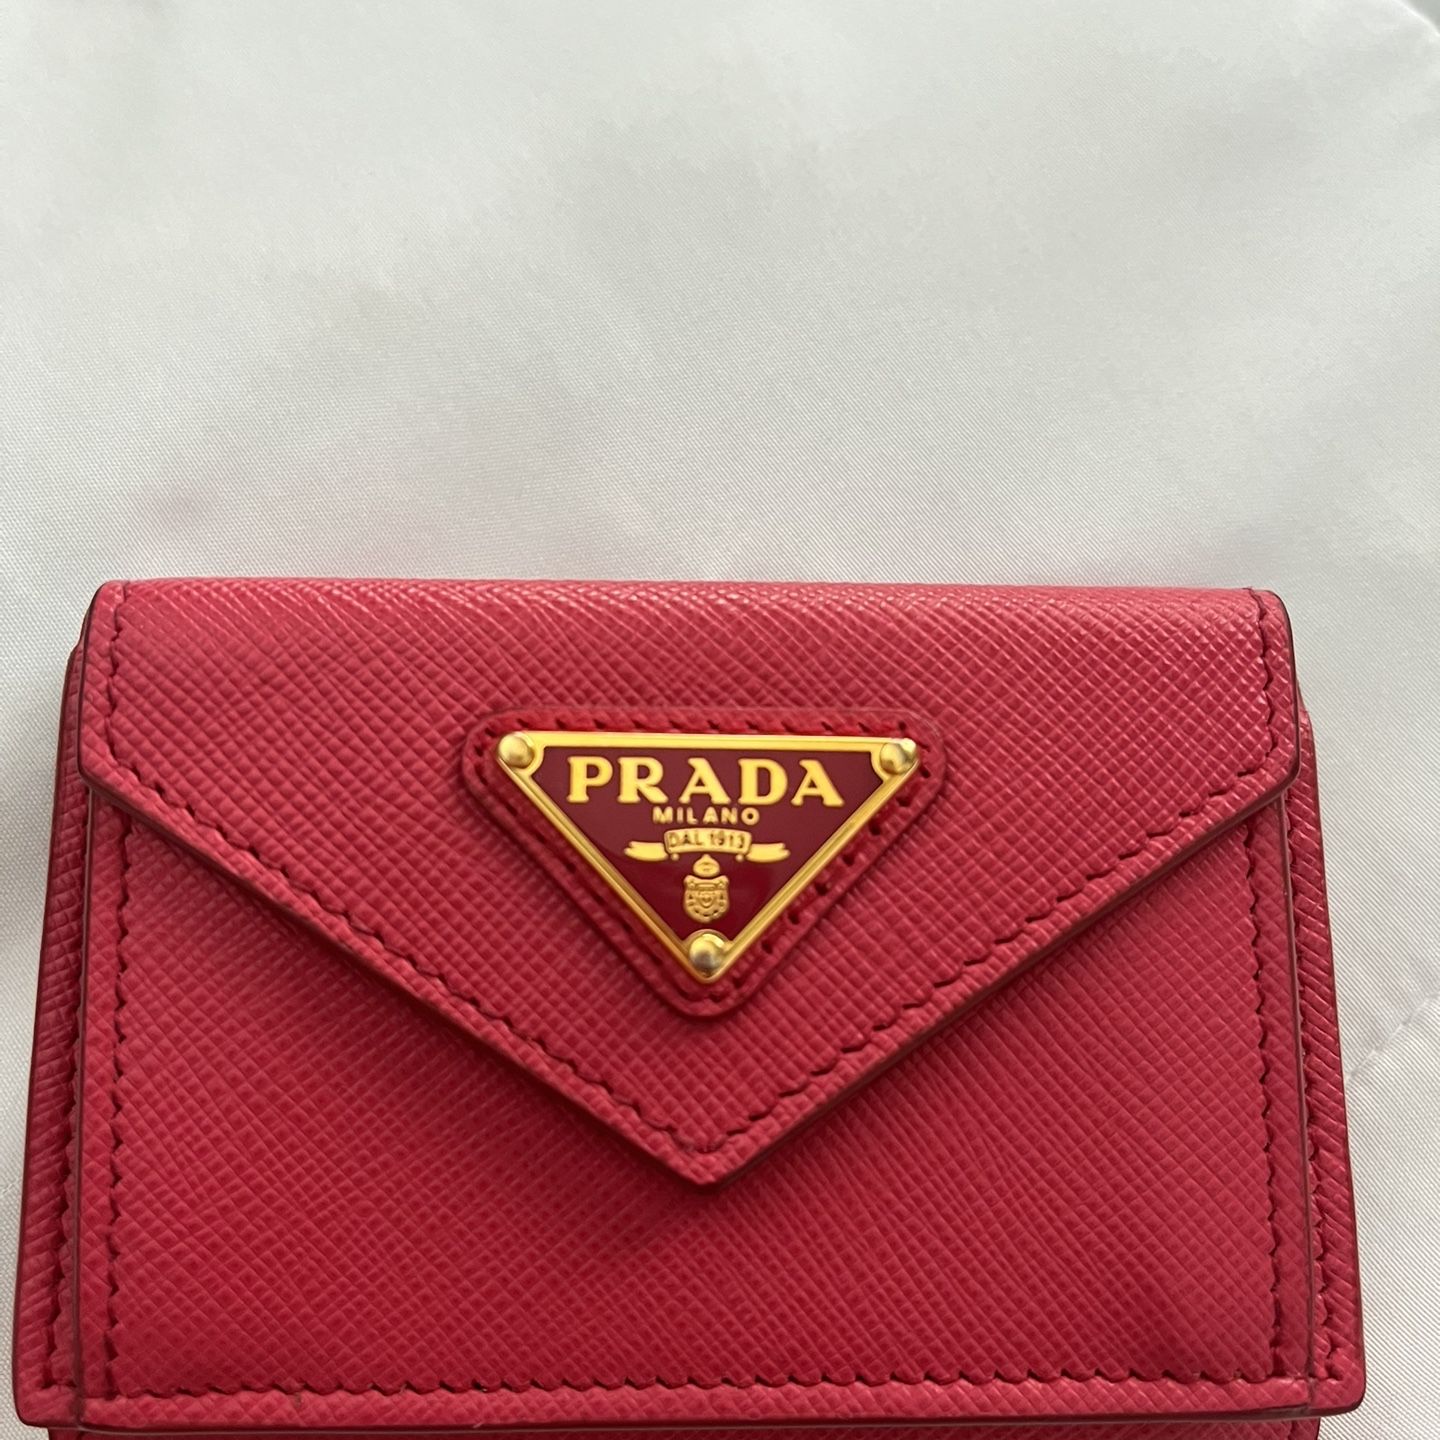 Prada Small Saffiano Leather Wallet 